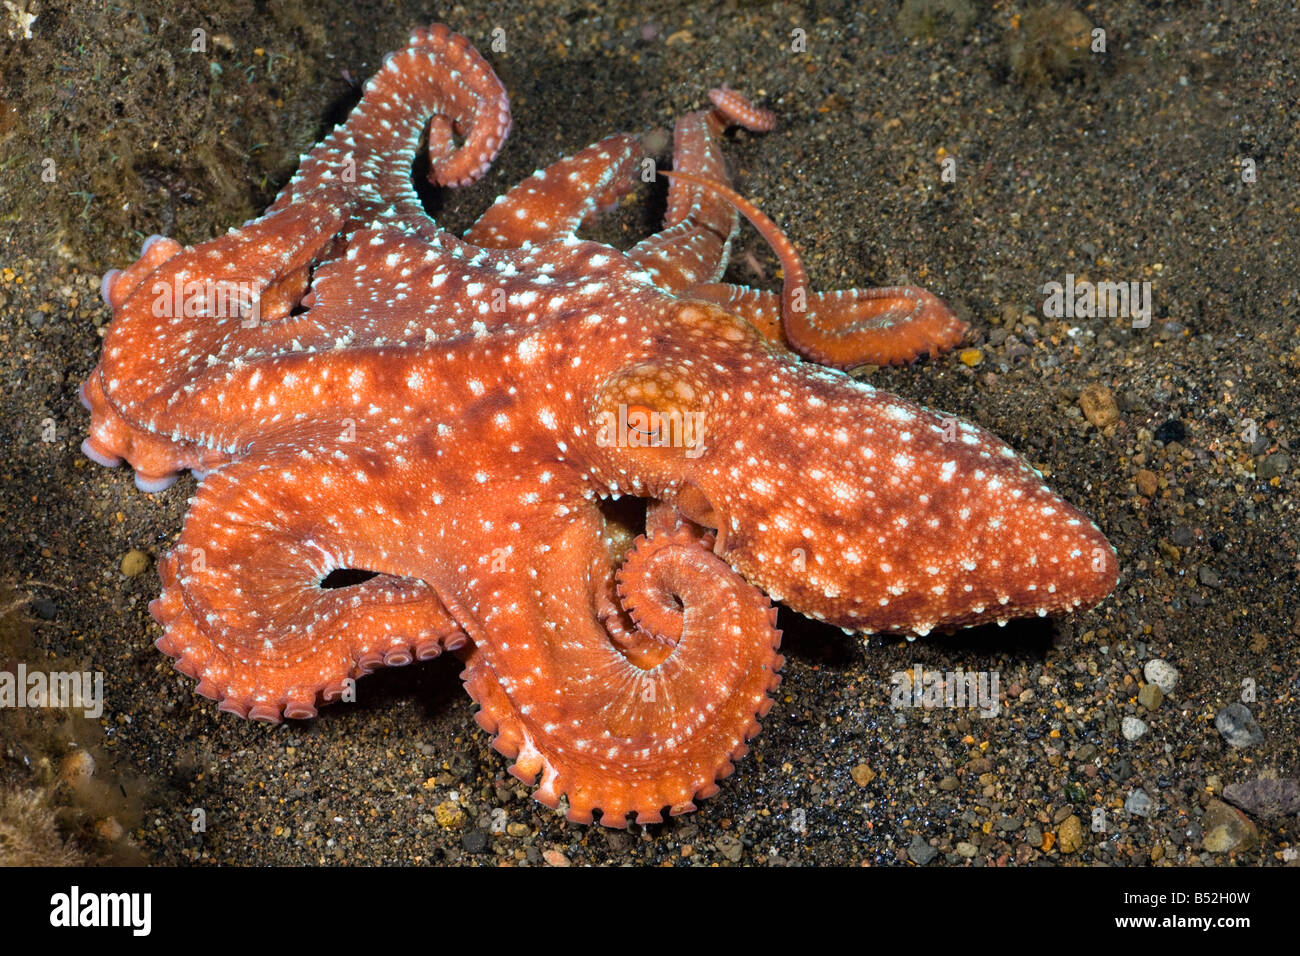 Starry night octopus, Octopus luteus, Komodo, Indonesia. Stock Photo